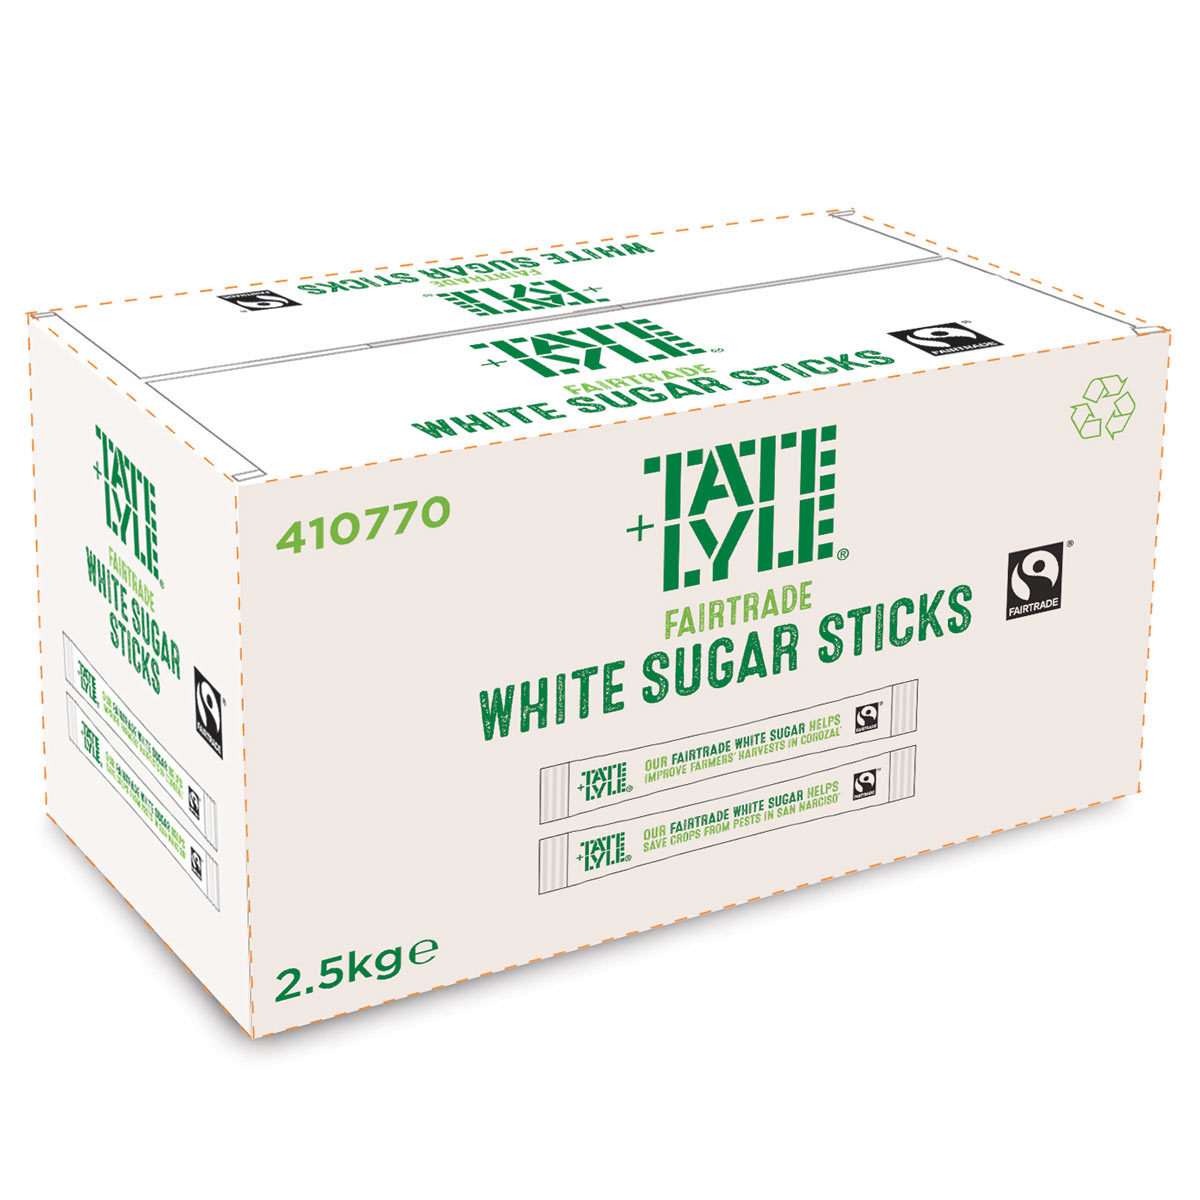 Image of white Tate & Lyle box on white background with White Sugar Sticks text